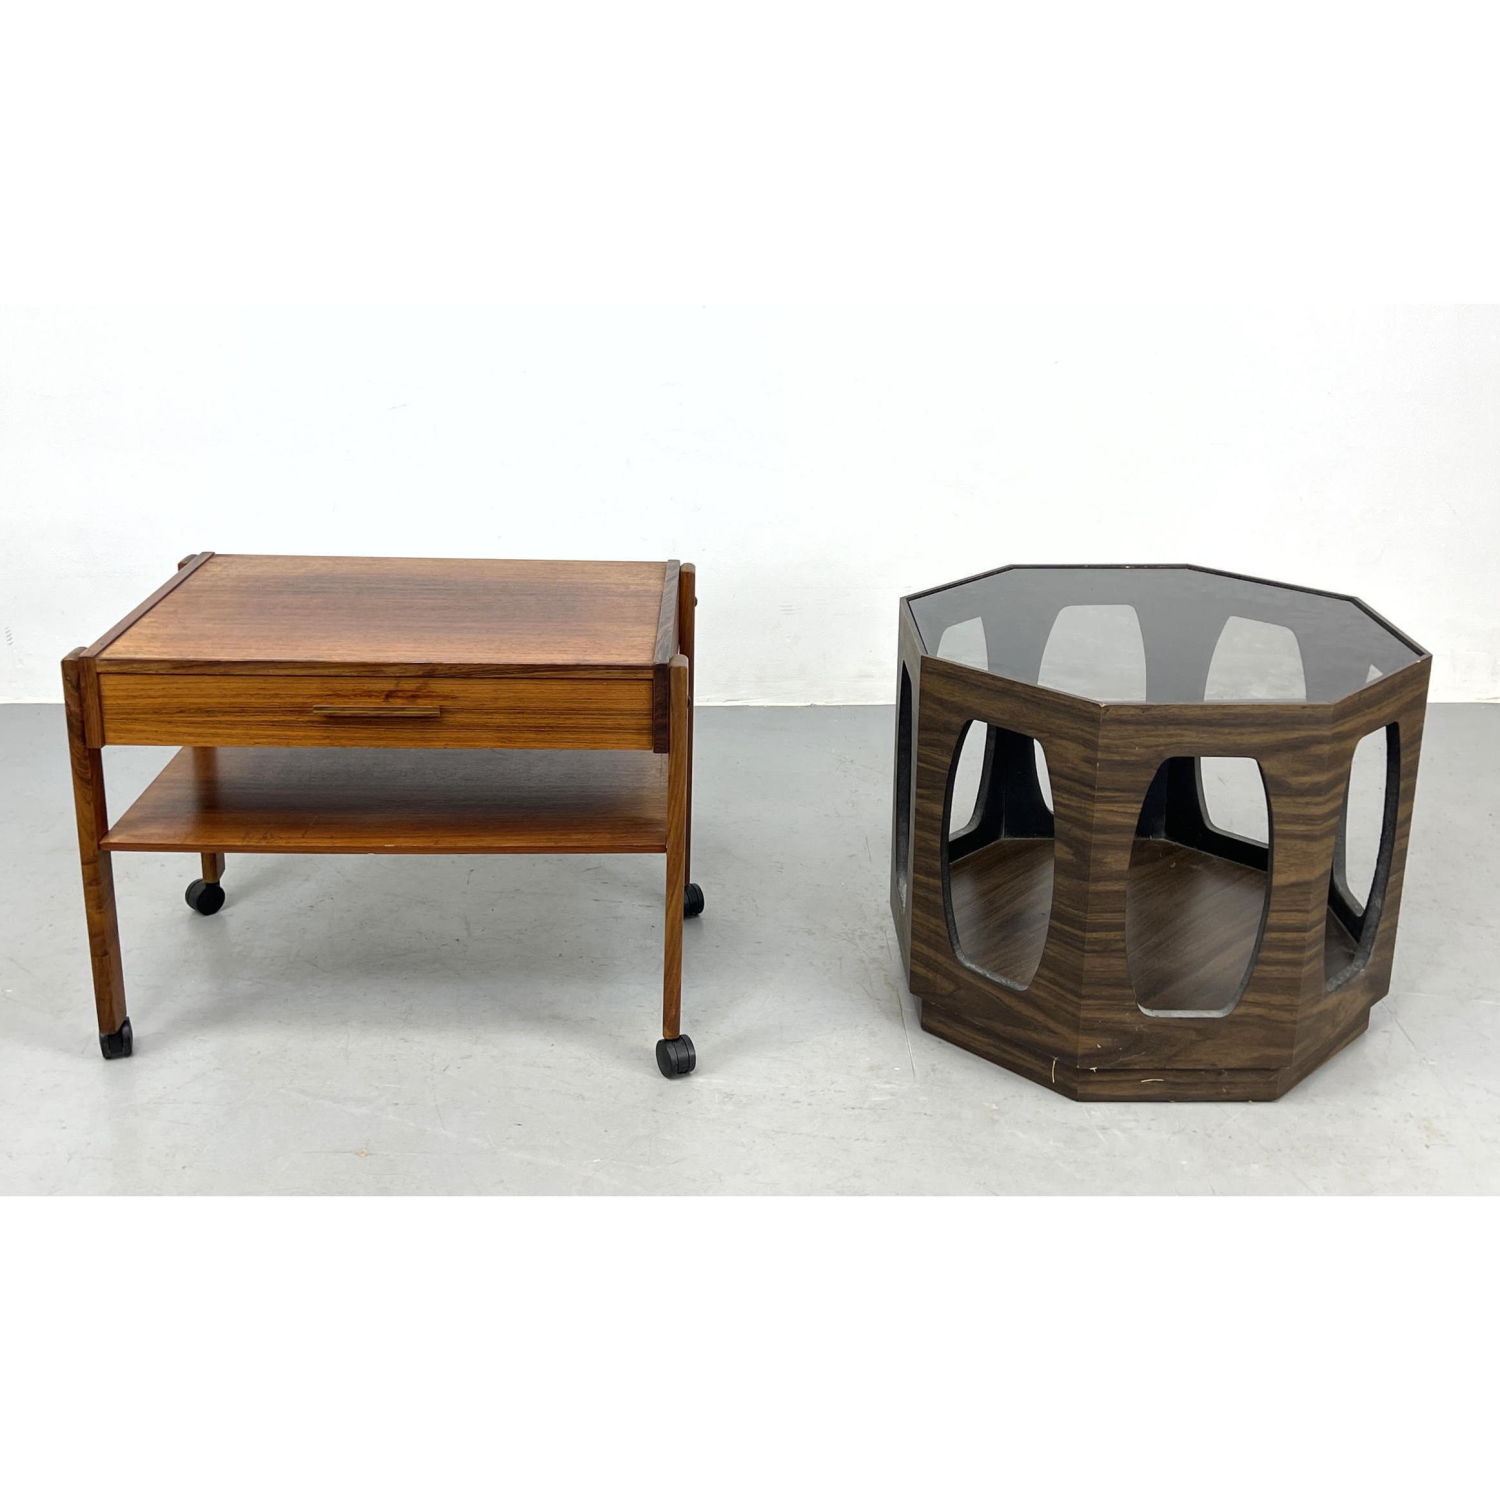 2pc Modernist Furniture. 1) Probber